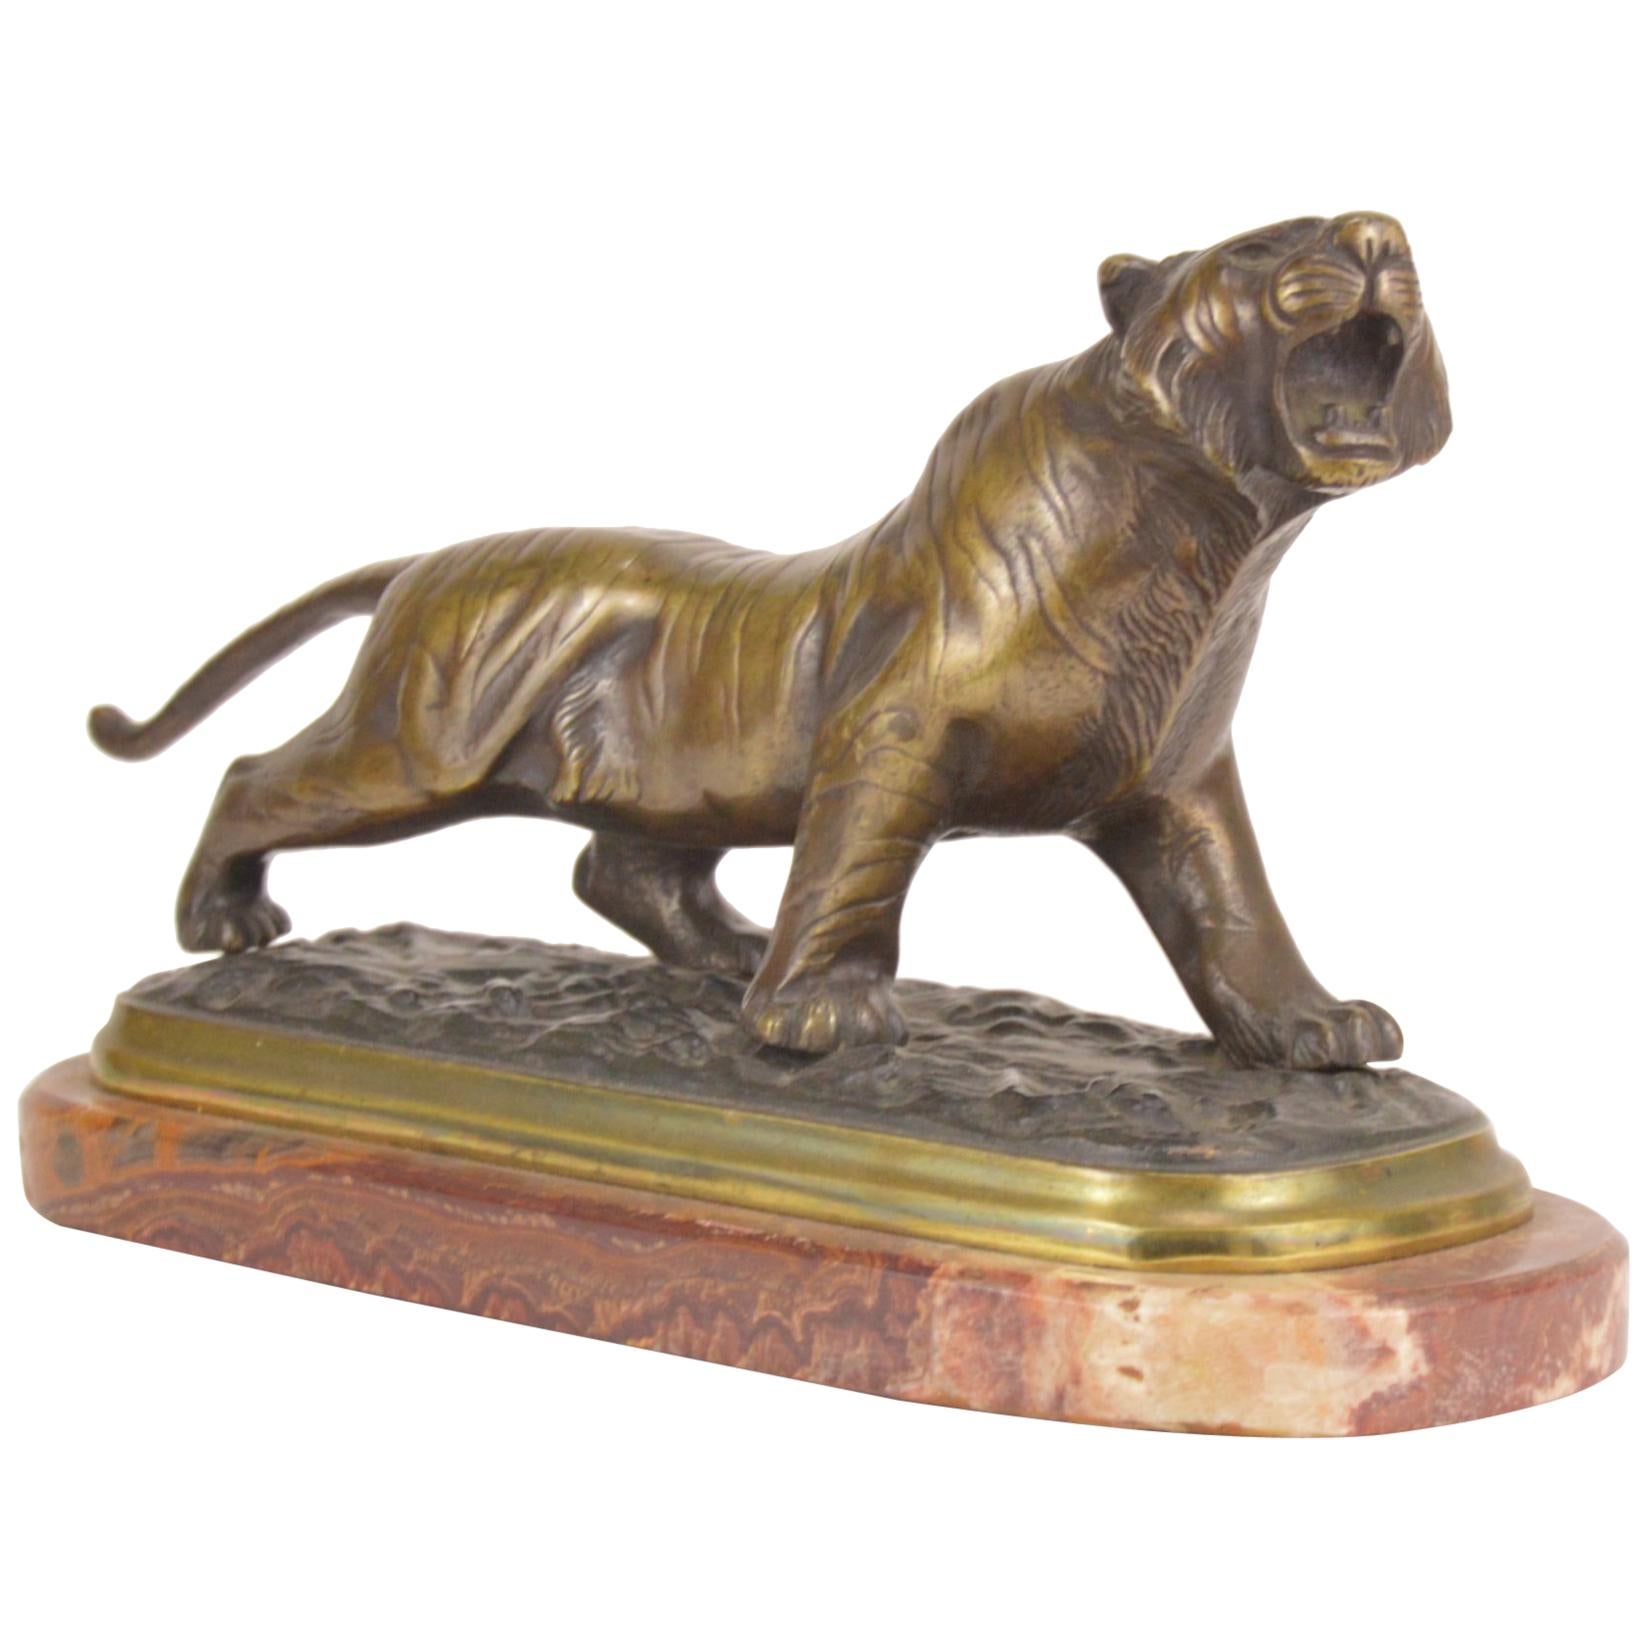 Patinated Art Deco Bronze Sculpture Representing a Roaring Tiger, 20th Century